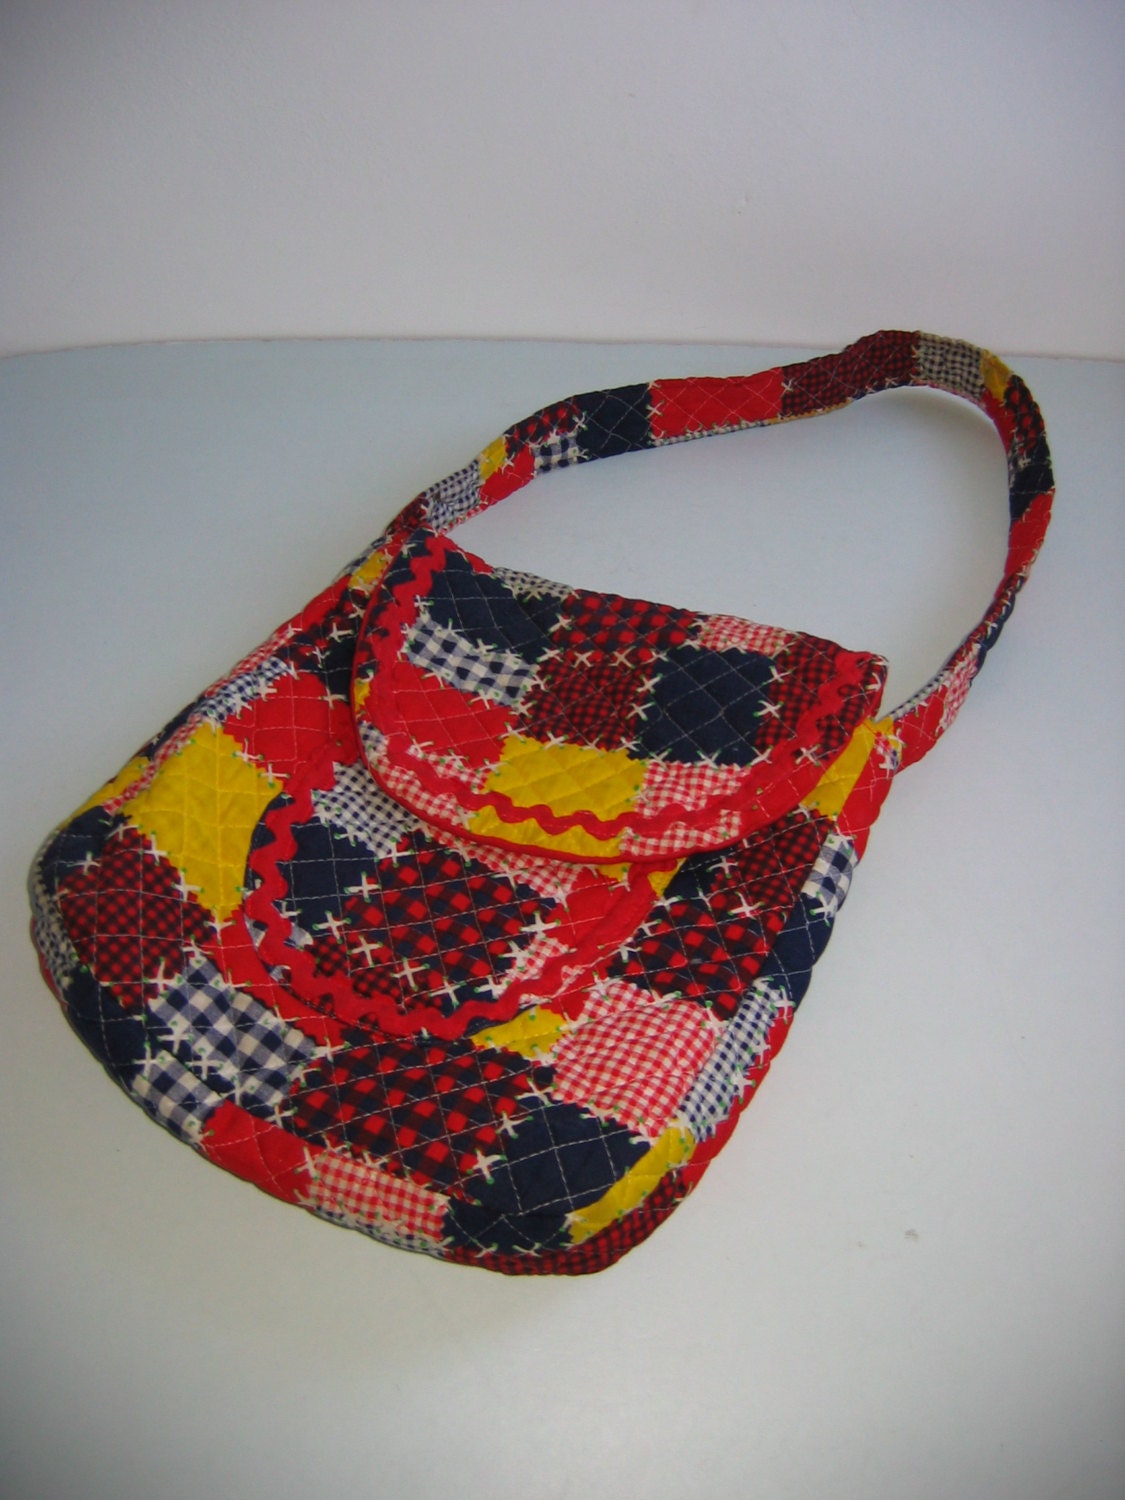 Boho Hippie Quilted patch pattern Tote Bag purse. Unique